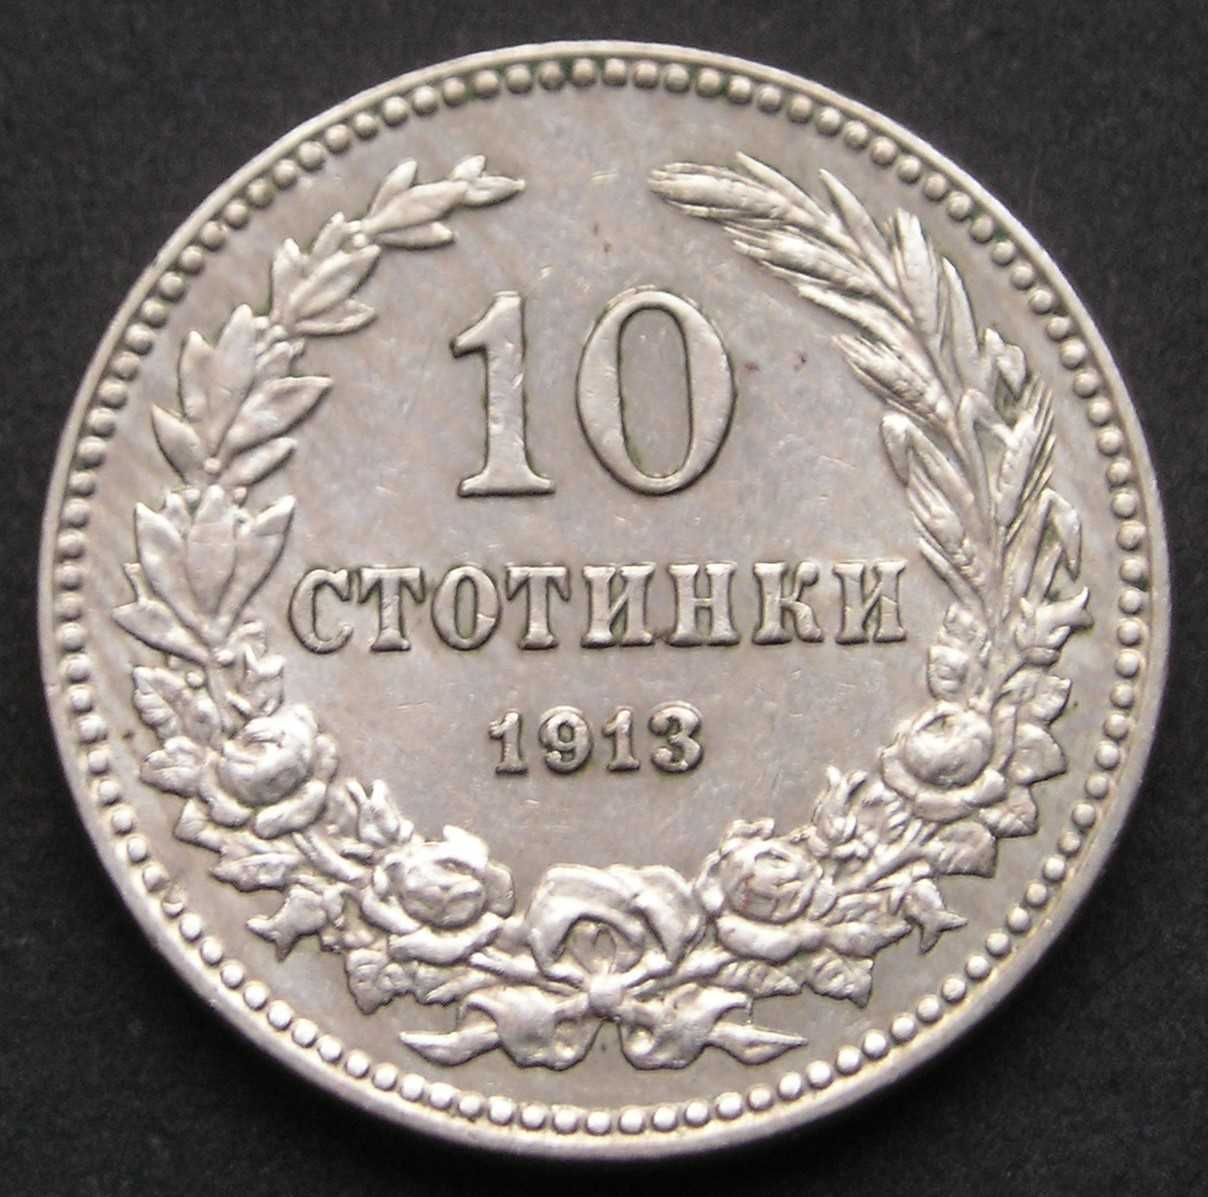 Bułgaria 10 stotinek 1913 - stan 2